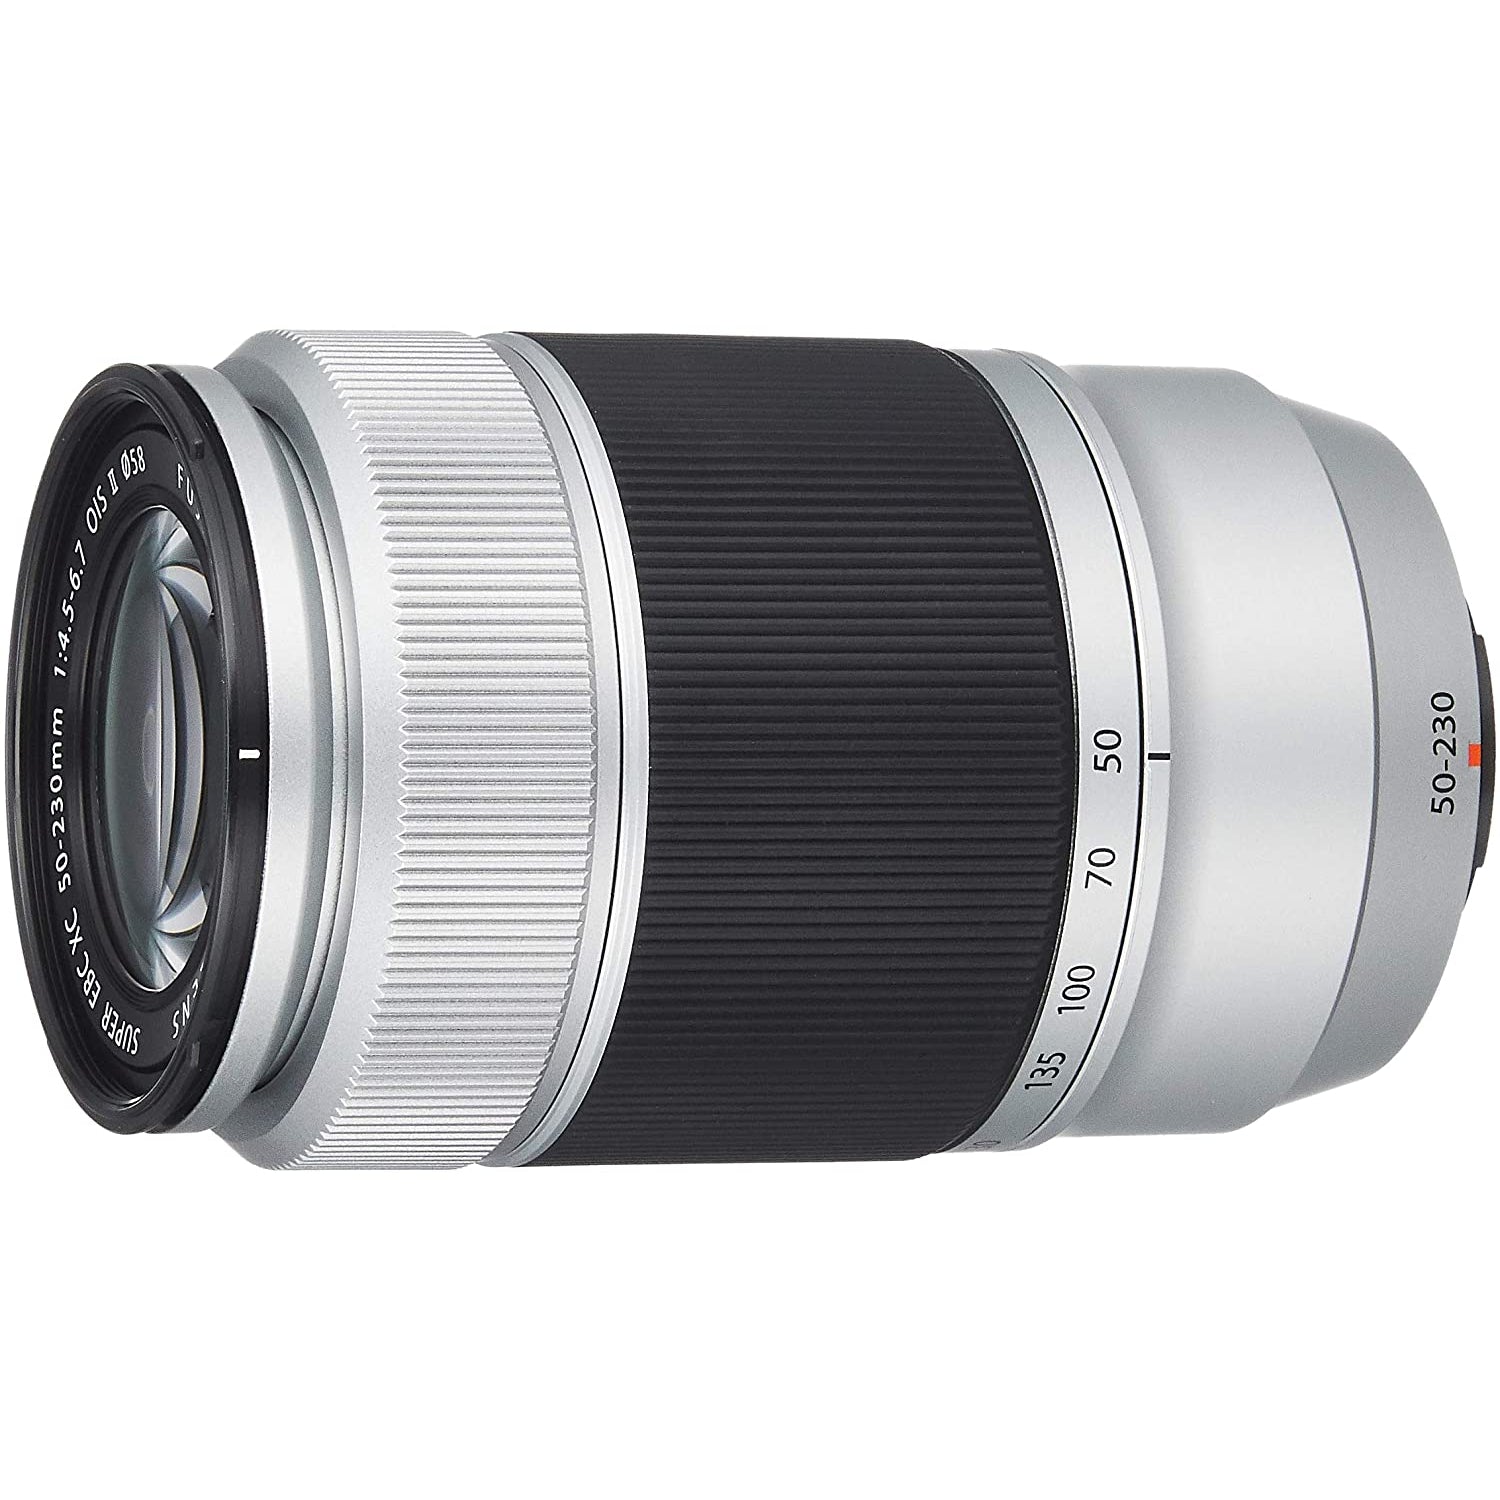 Fujifilm XC 50-230 mm f4.5-6.7 OIS II Lens - Silver